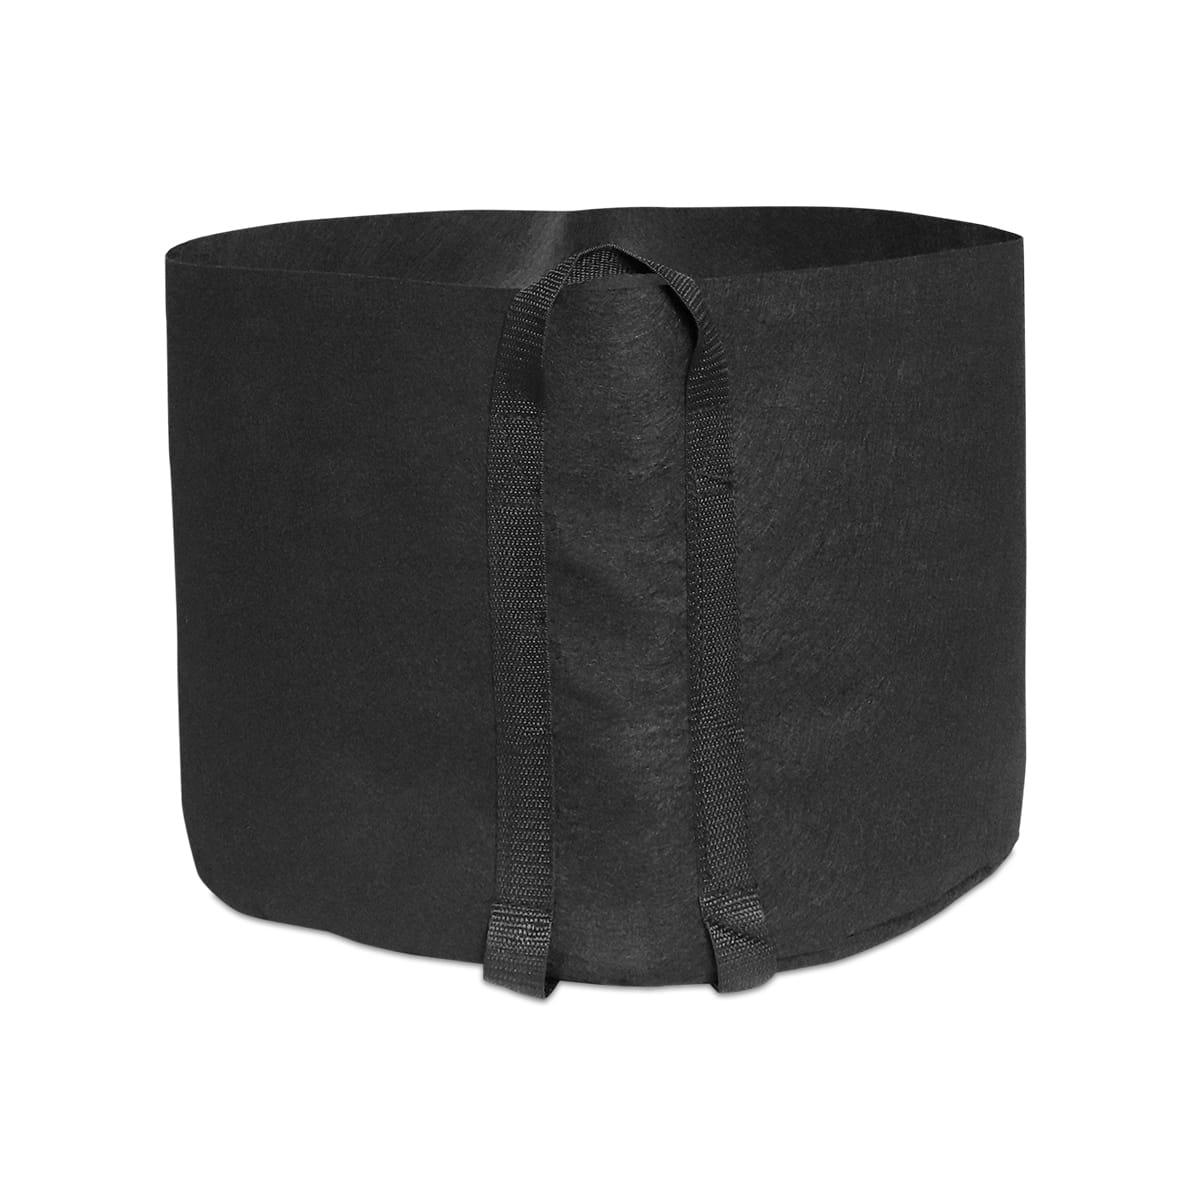 Phat Sack Black 10 Gallon Fabric Pot Heavy Duty